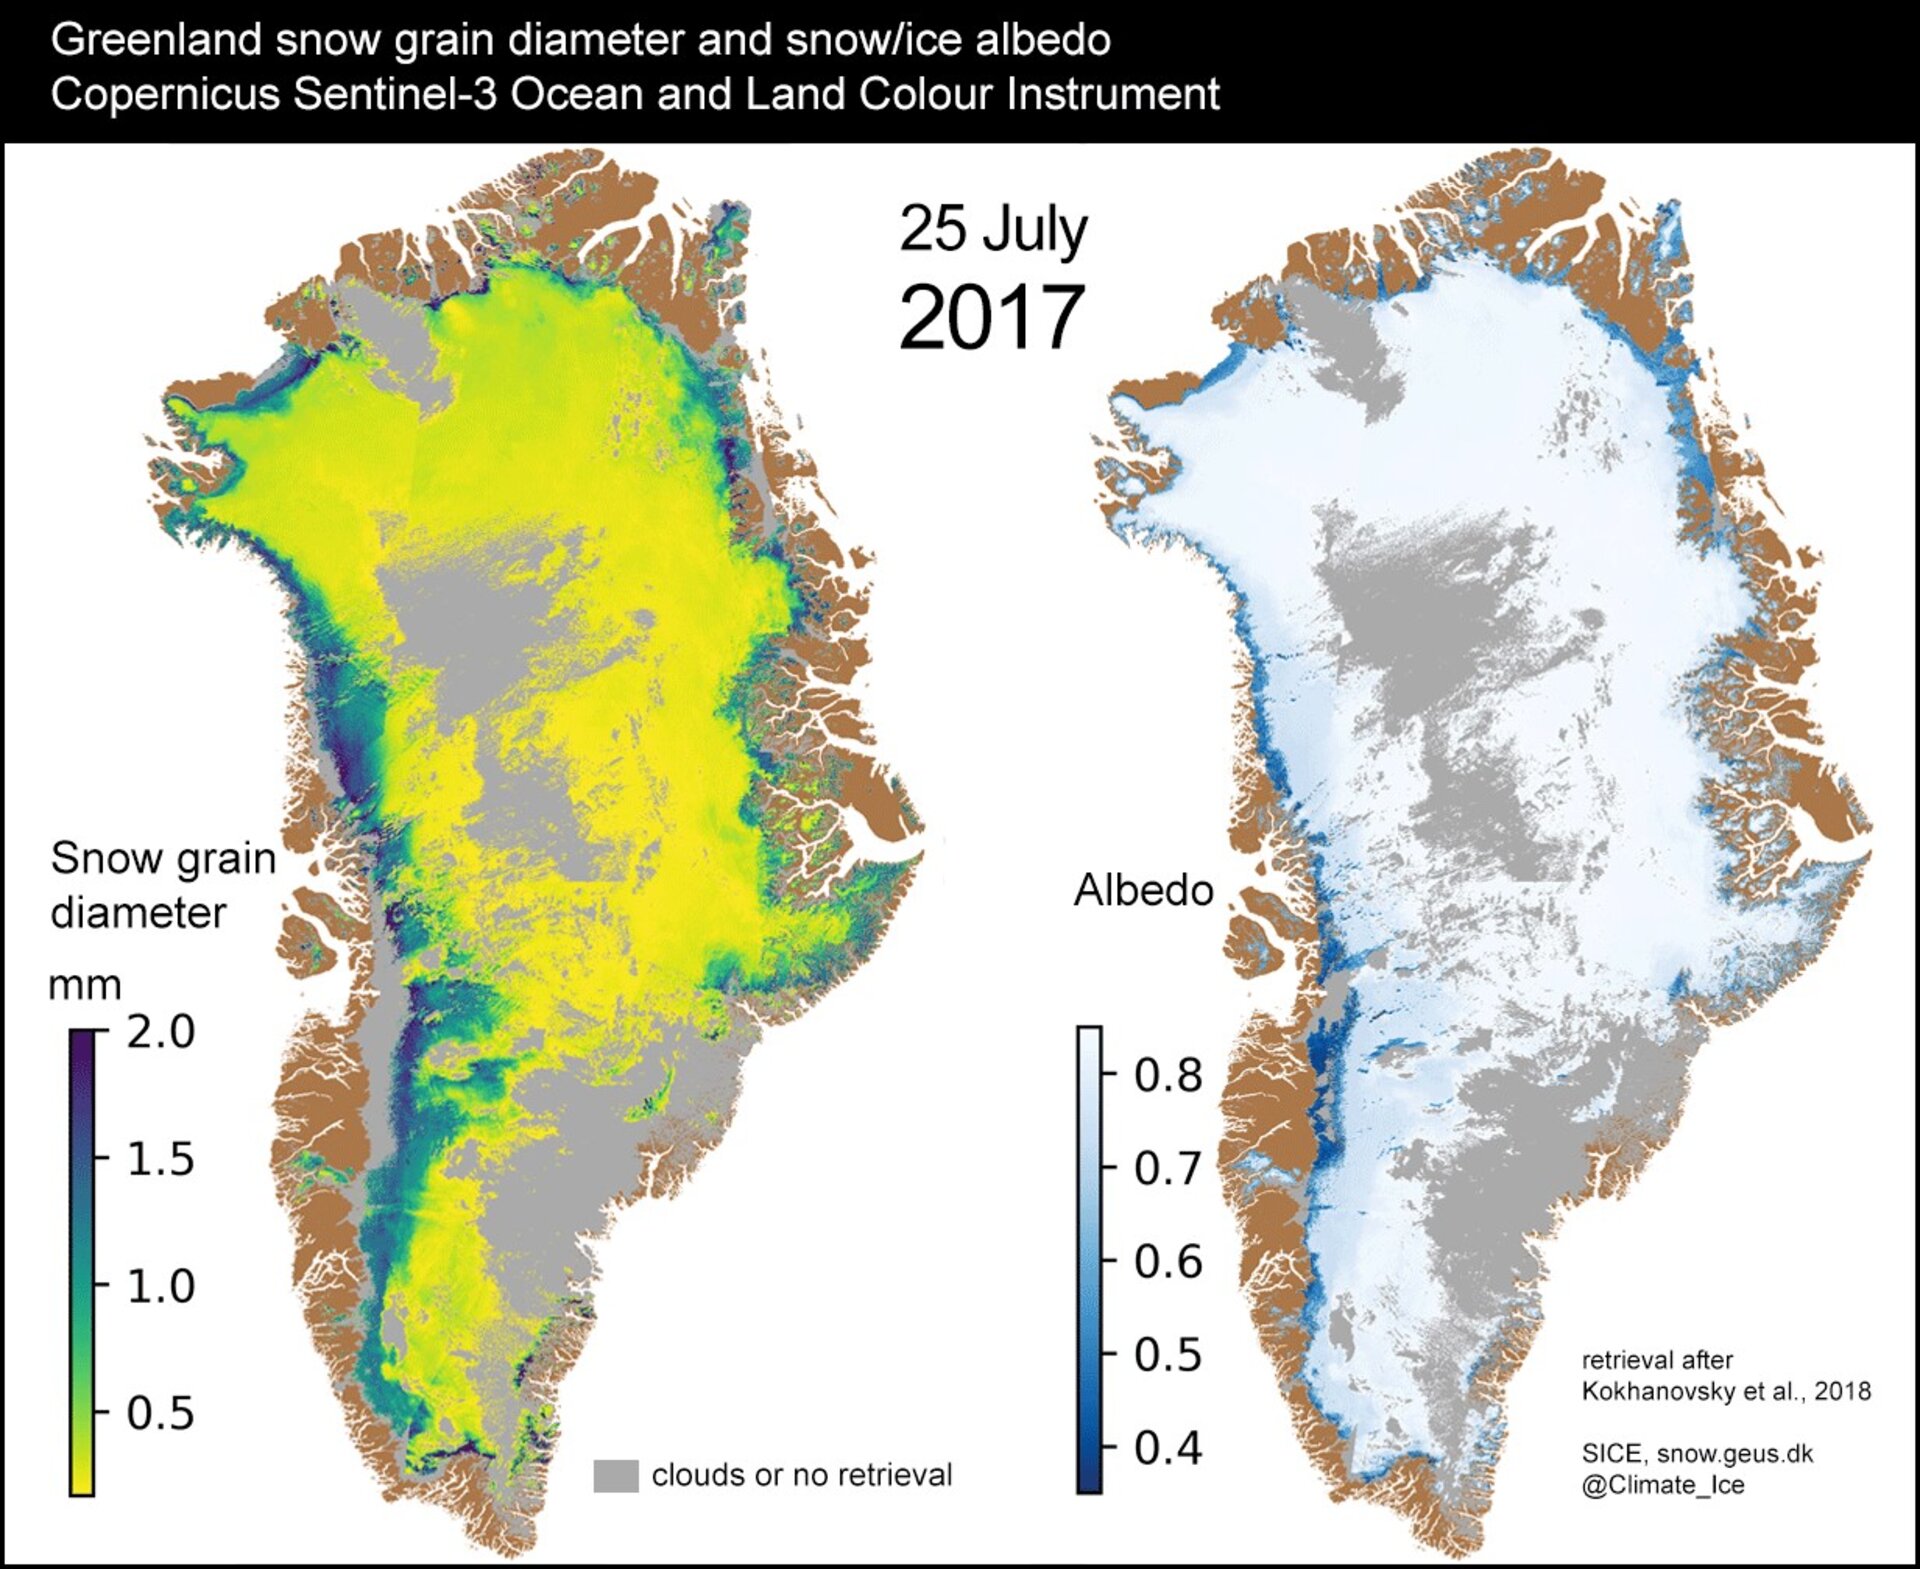 Greenland snow grain diameter and reflectance